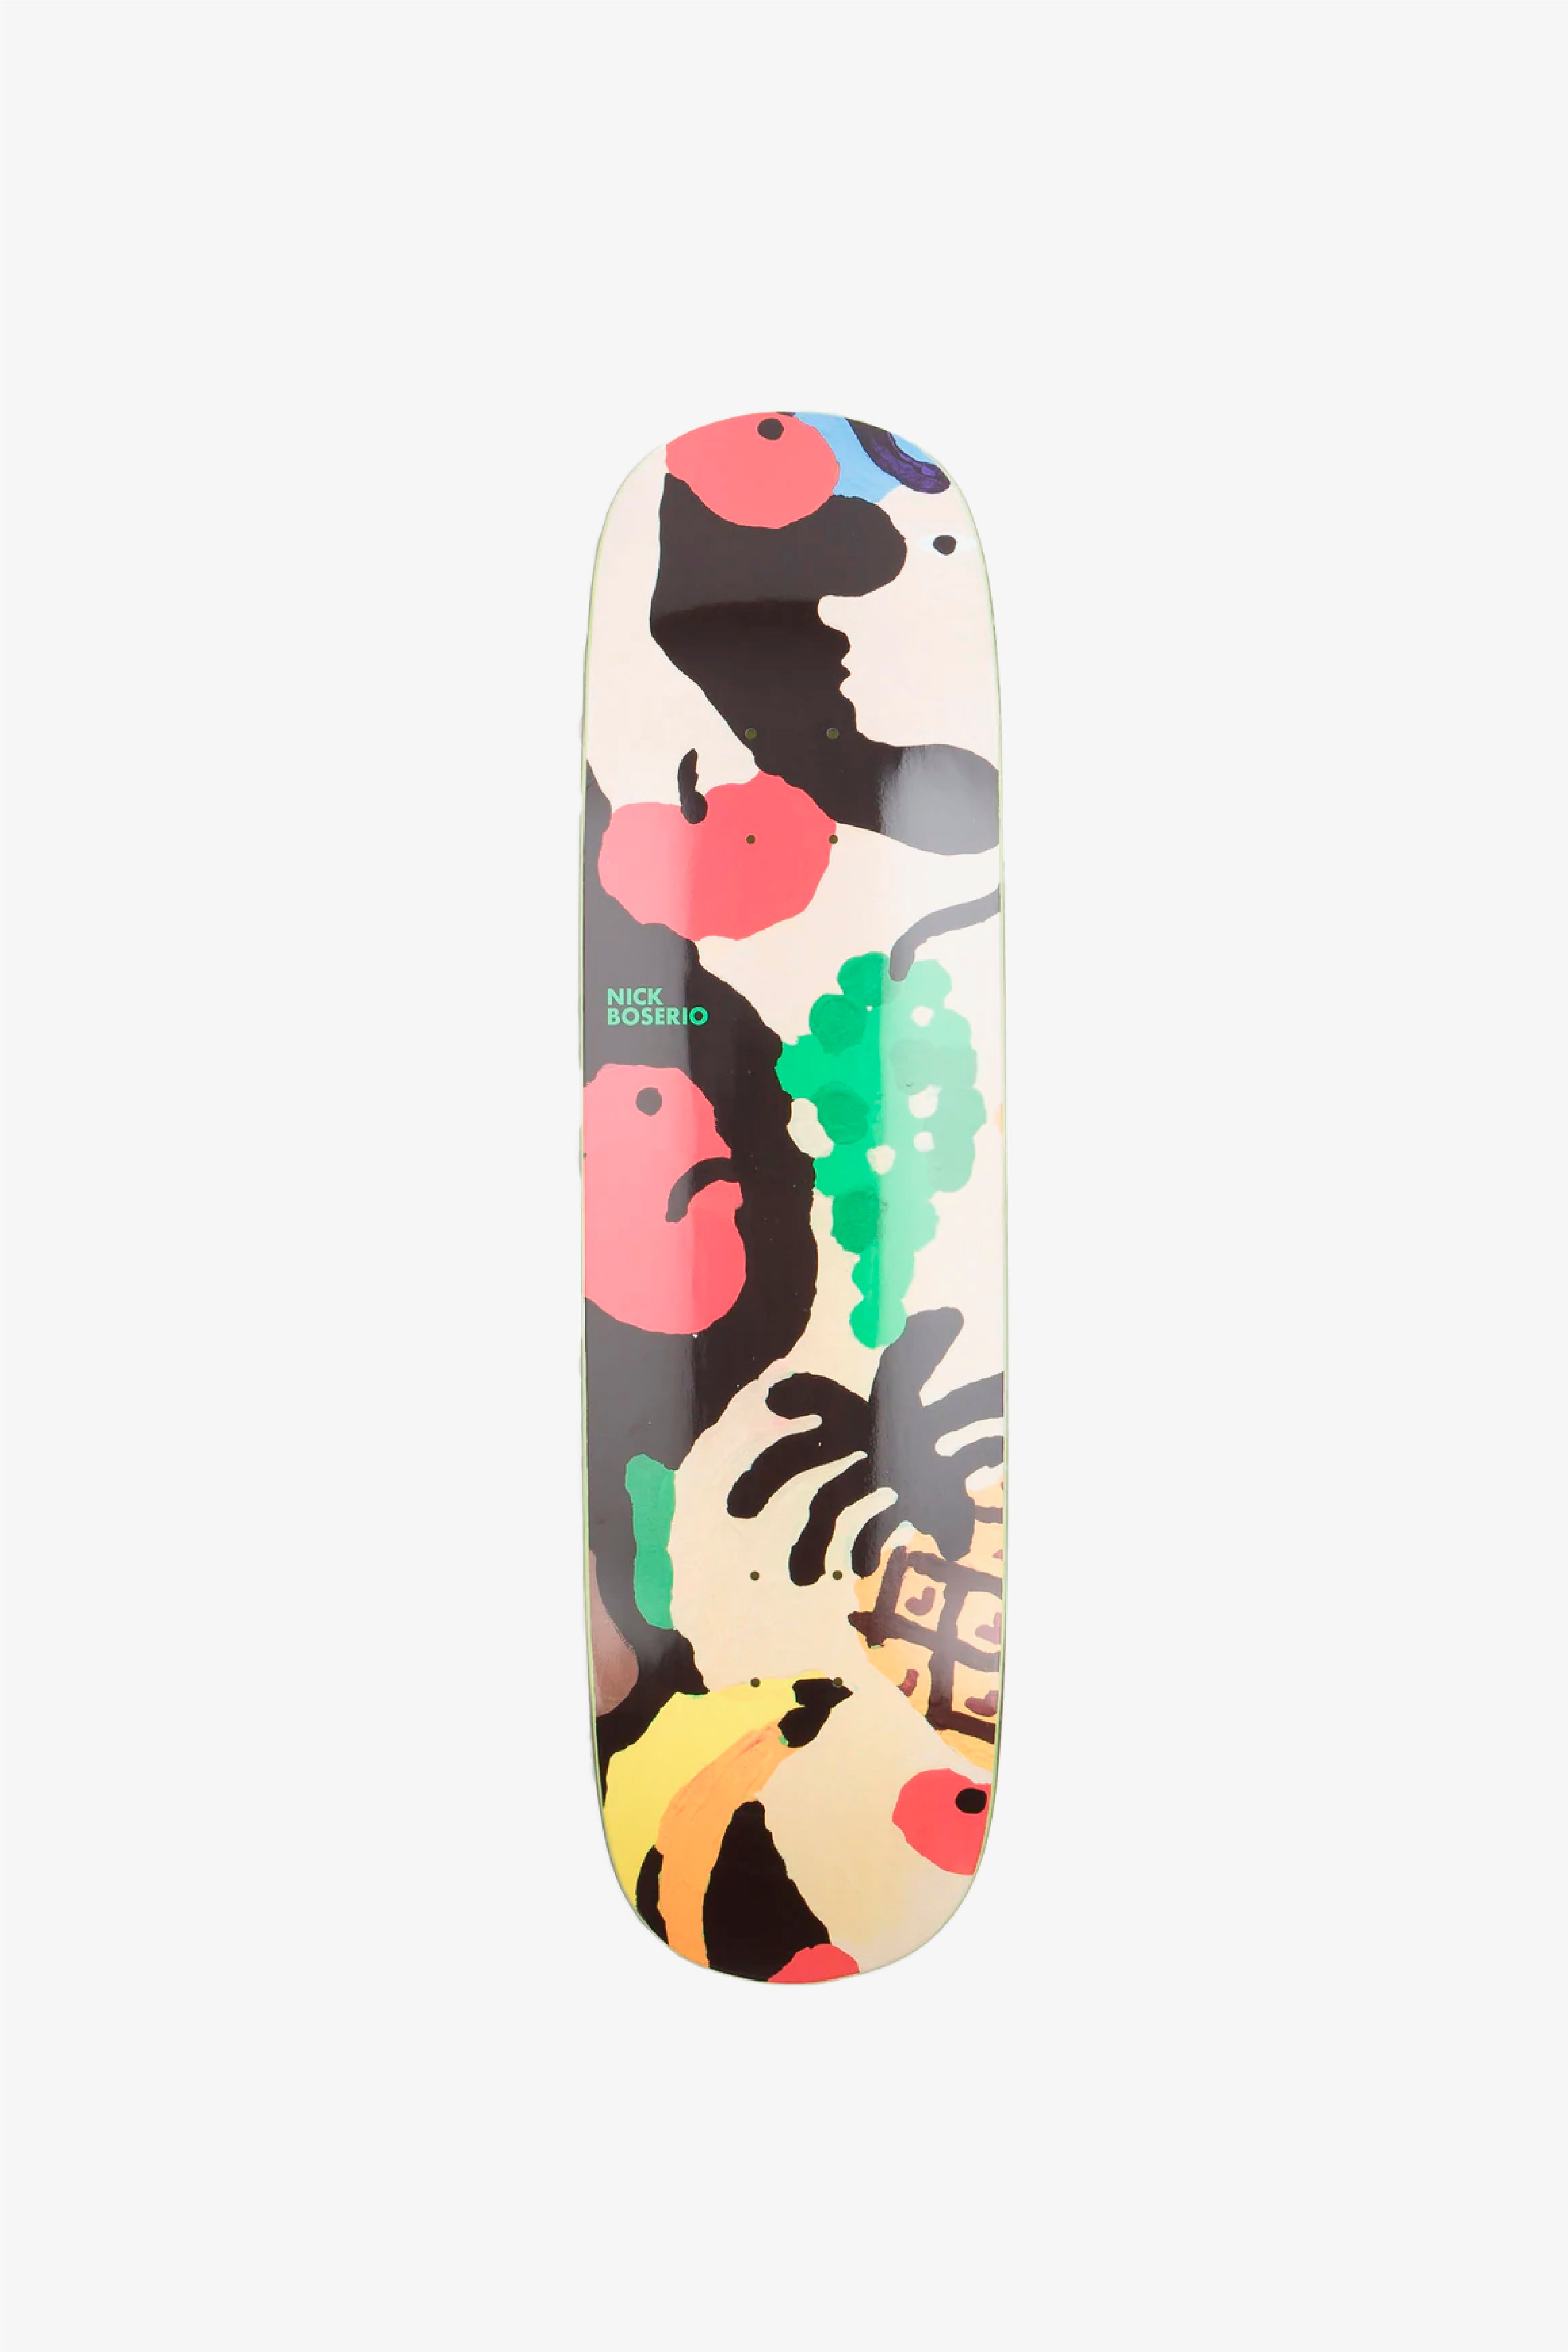 Selectshop FRAME - POLAR SKATE CO. Nick Boserio Fruit Lady "P2 Shape" Deck Skate Dubai